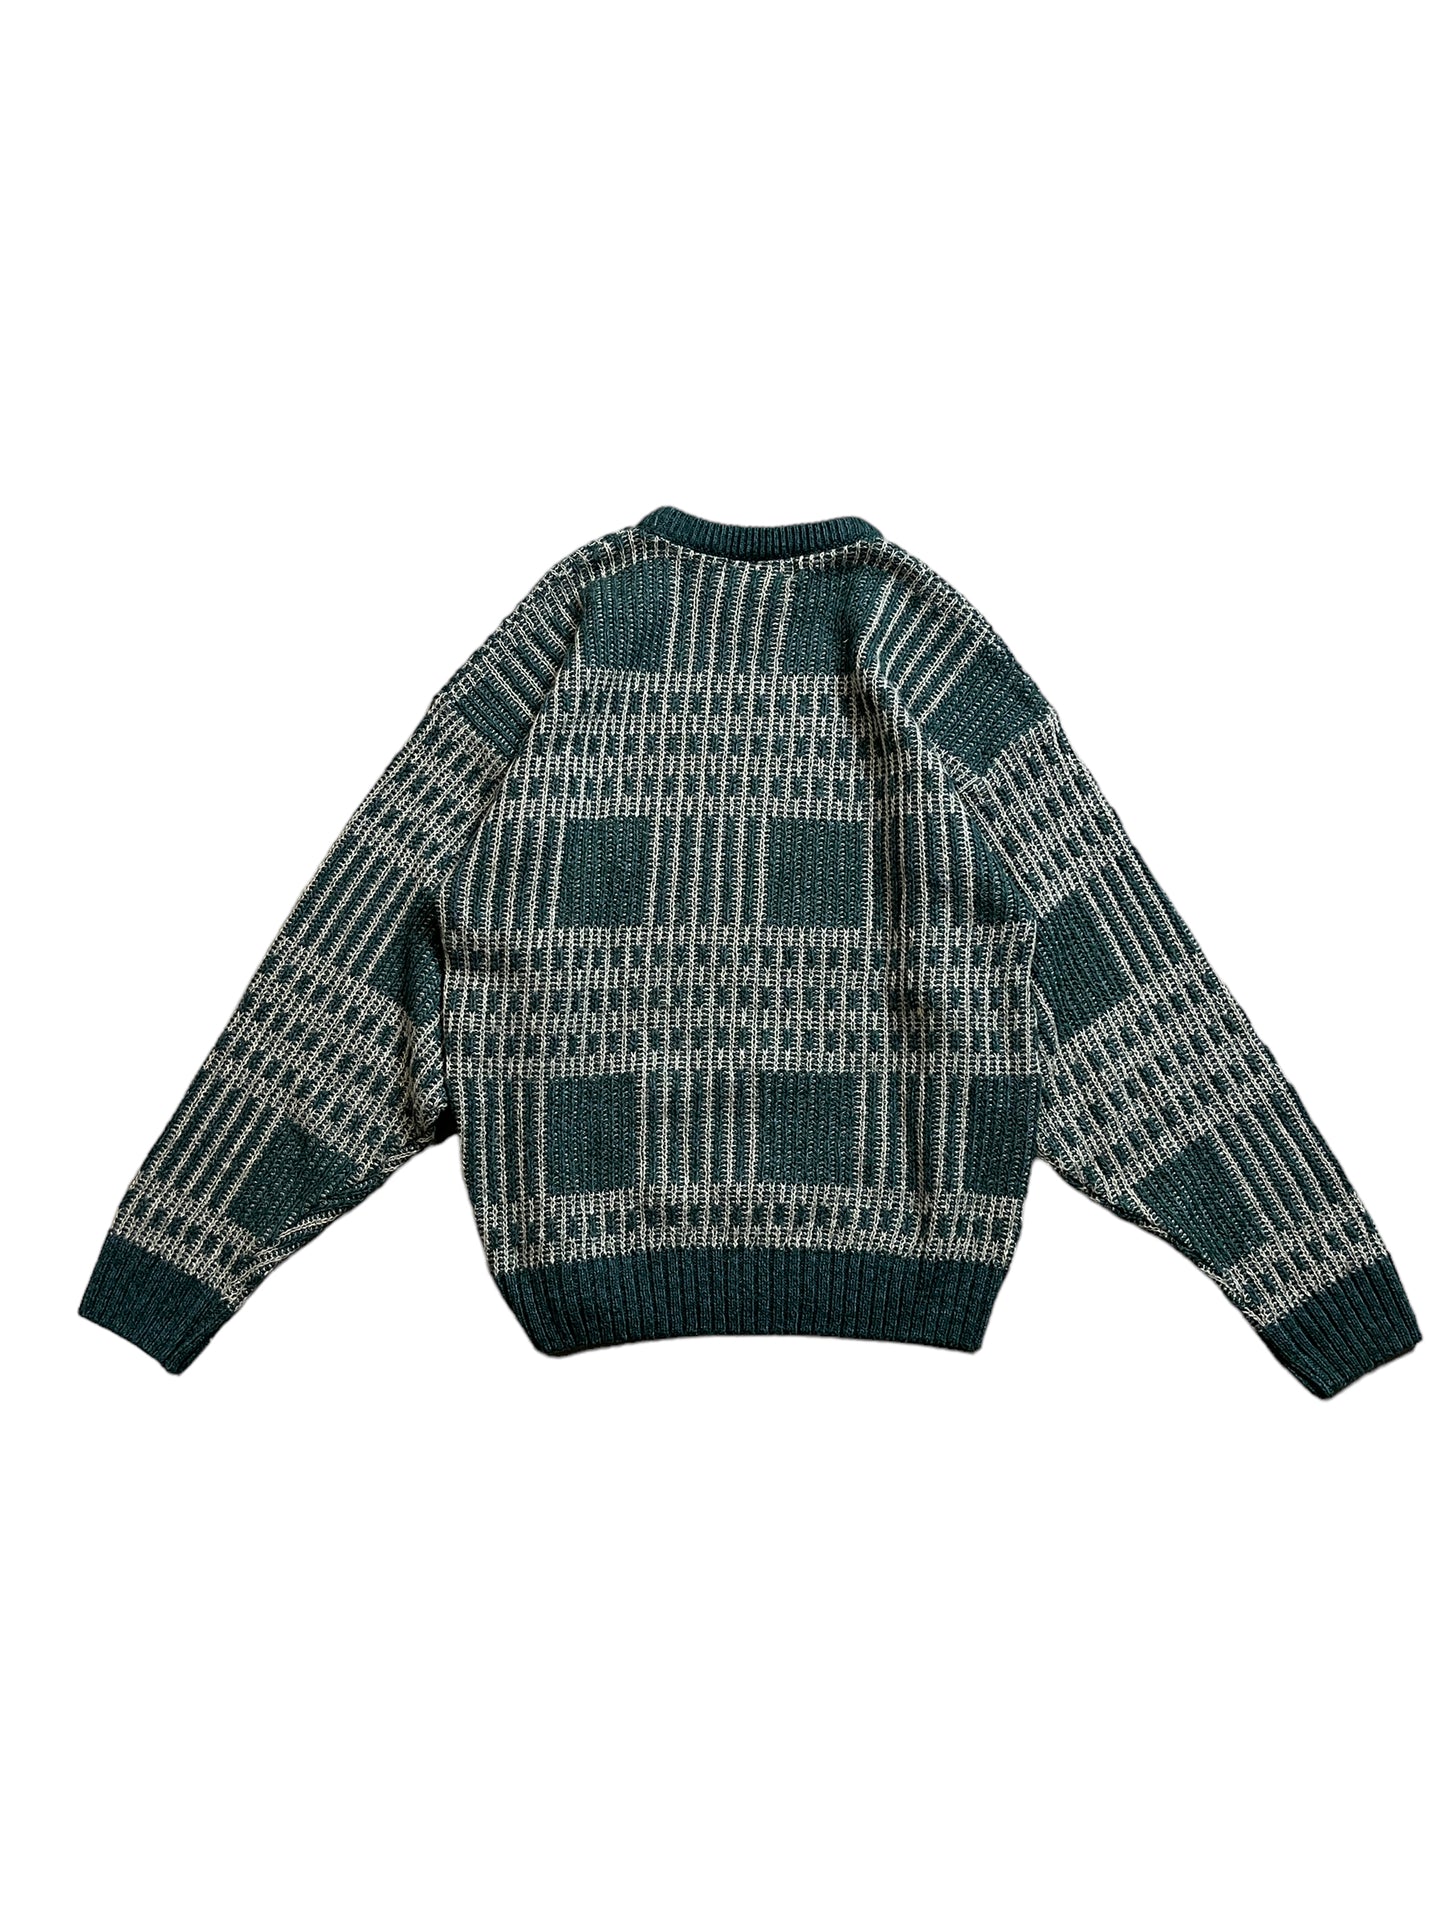 Vintage "I.T.E.M.S" Knit Sweater